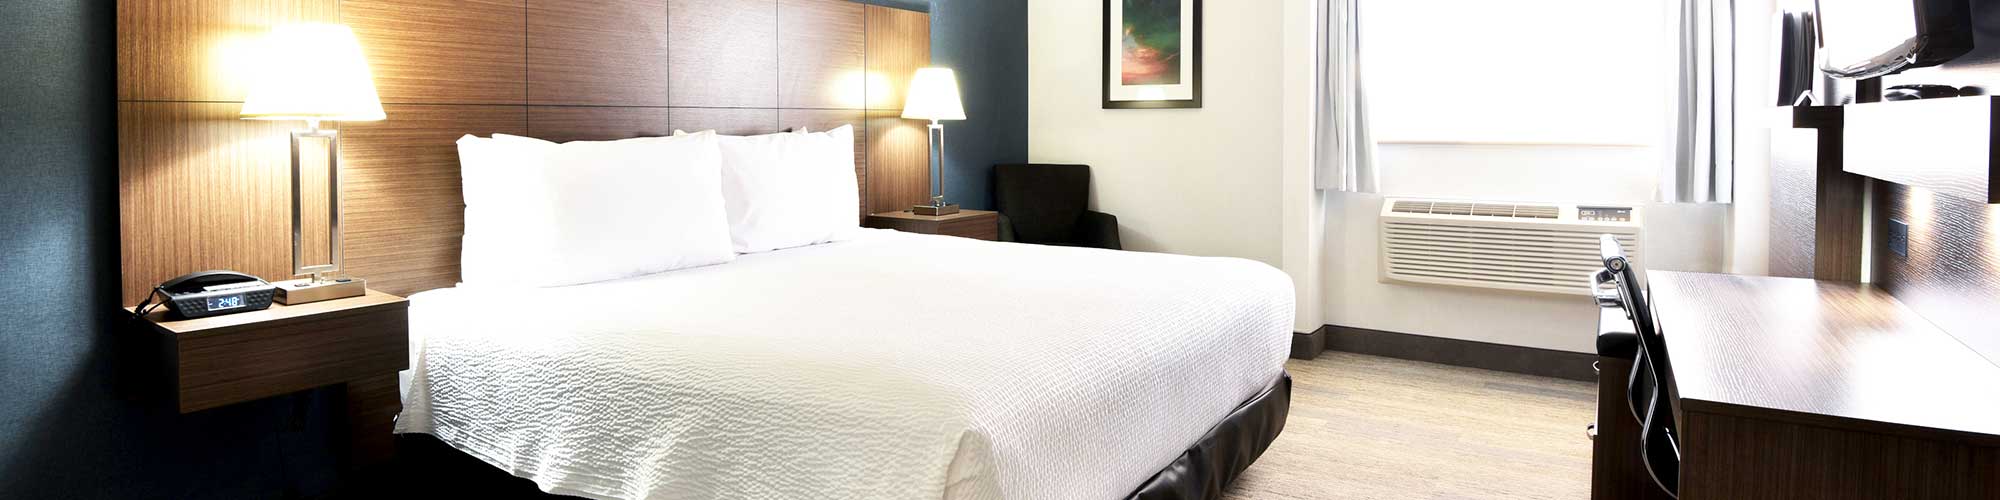 Winnipeg hotel guest room with single queen bed